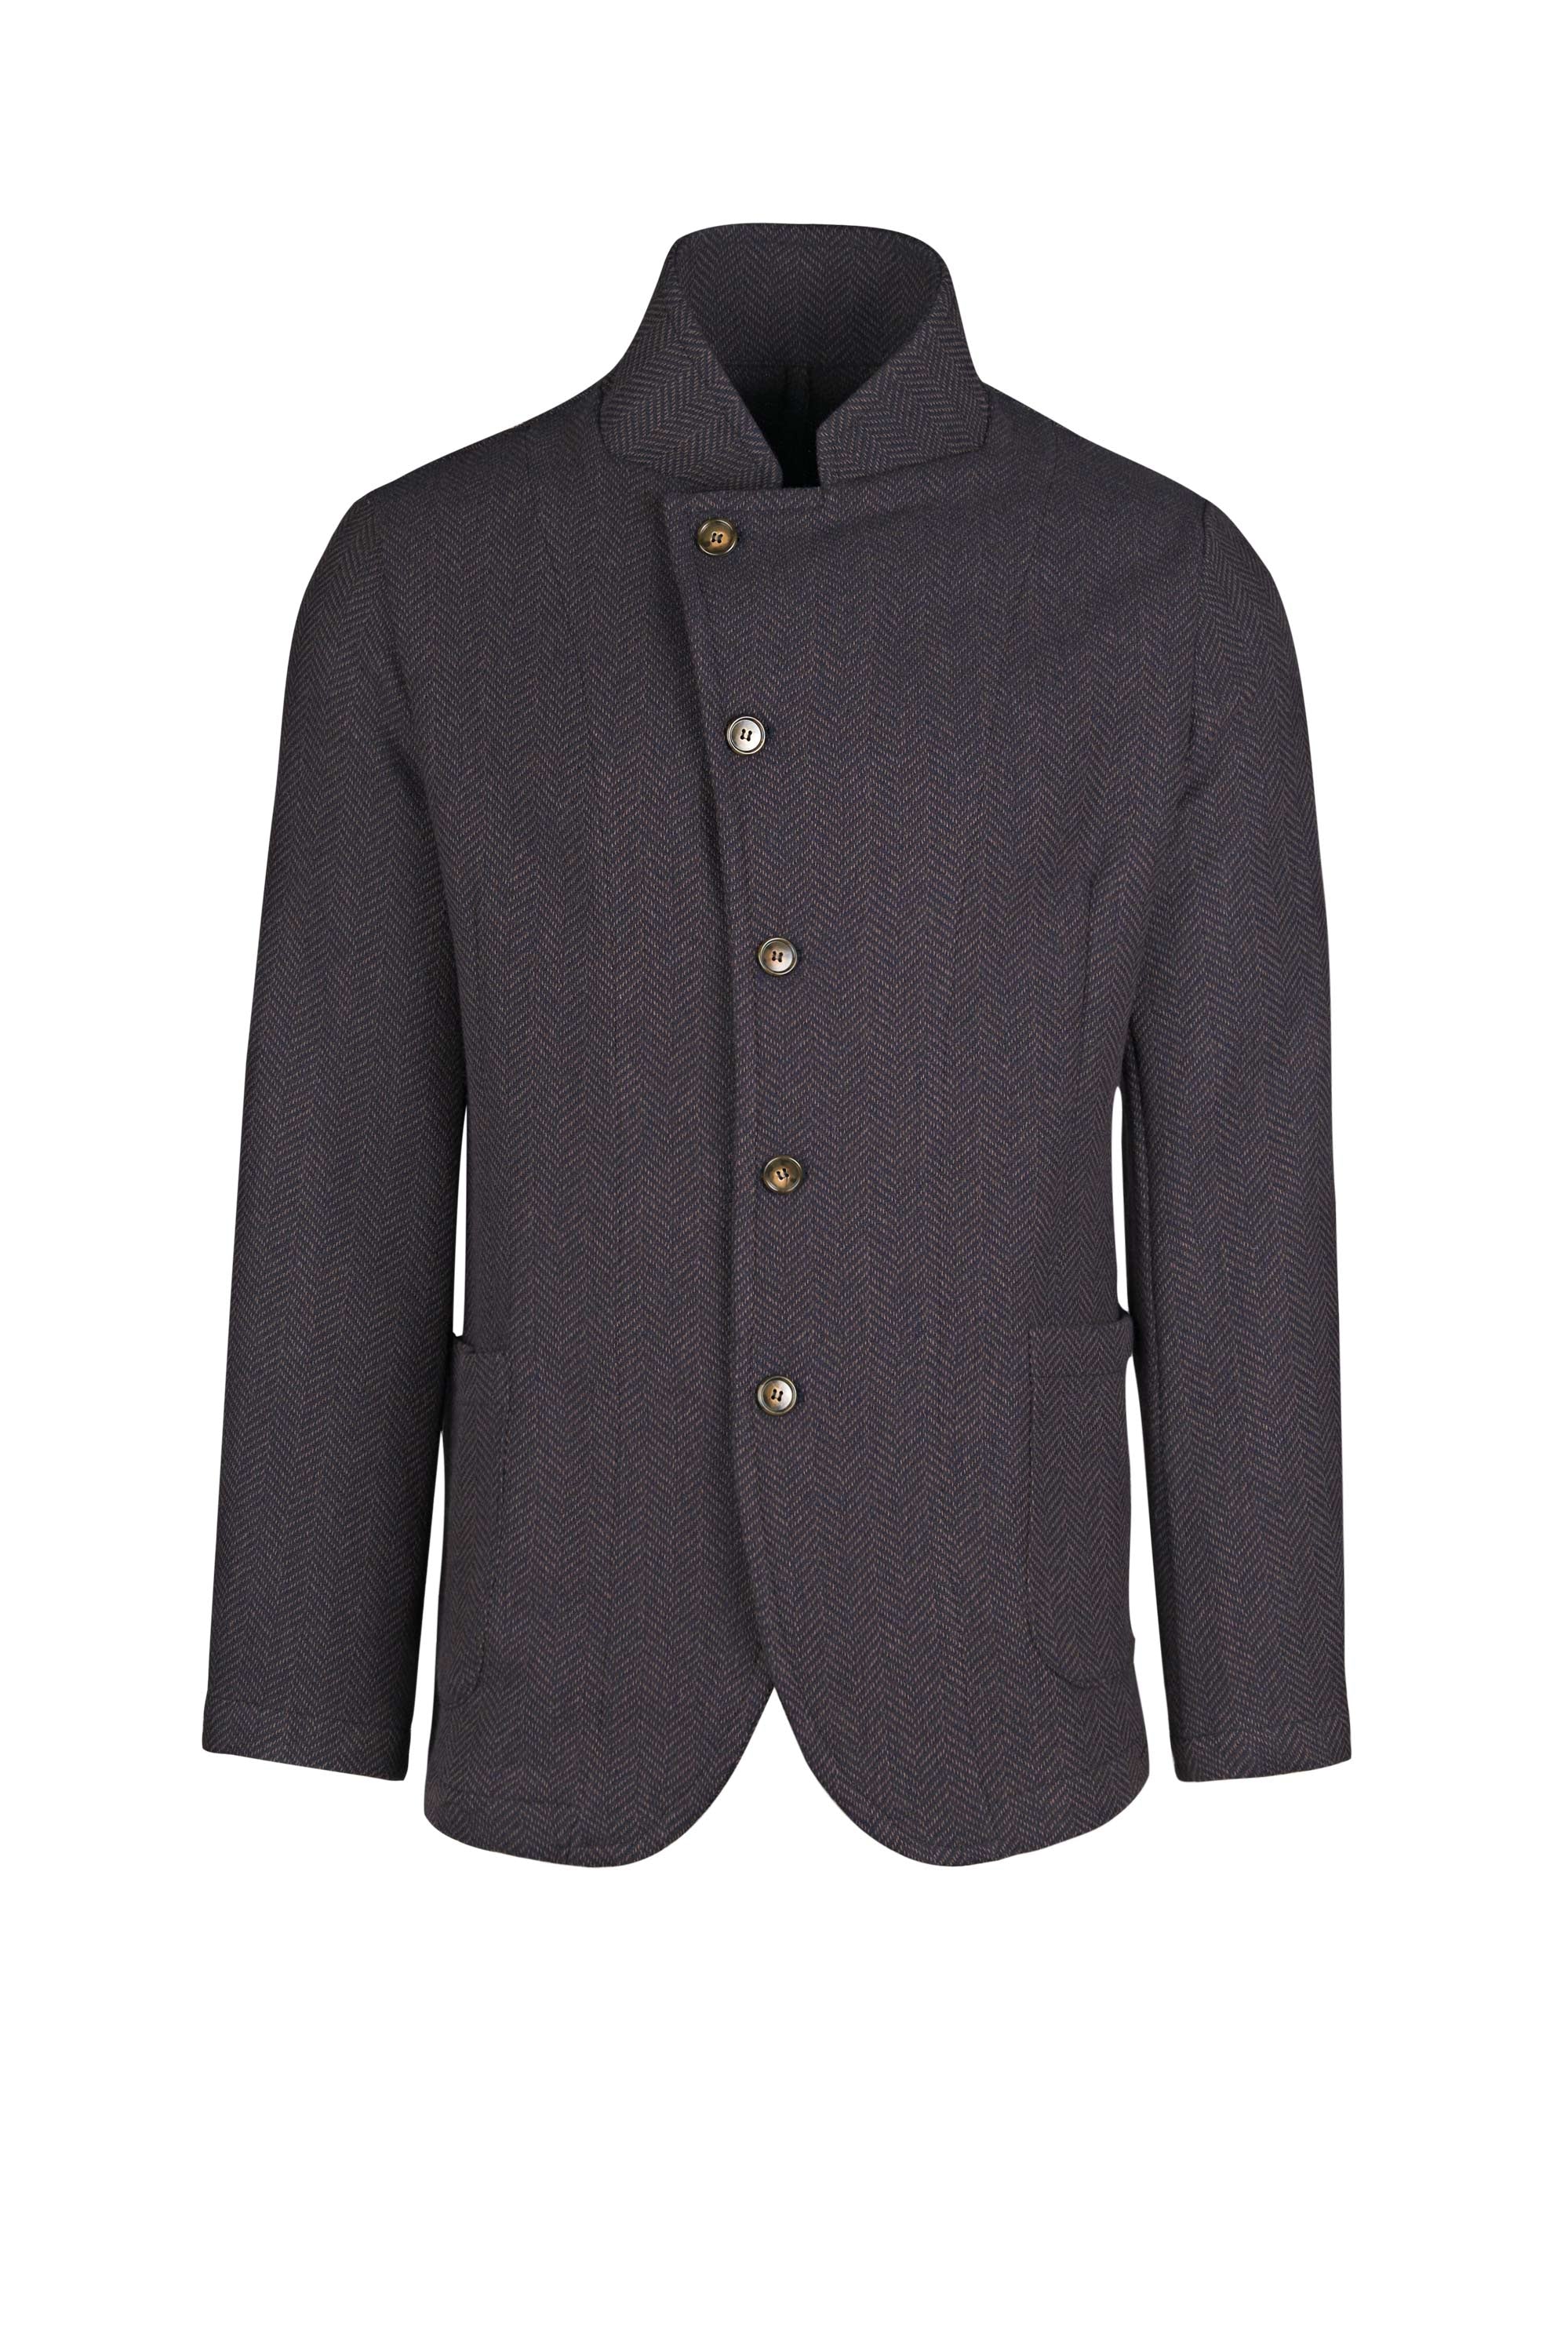 MONTEZEMOLO Online Shop | Jackets & Blazers Collections